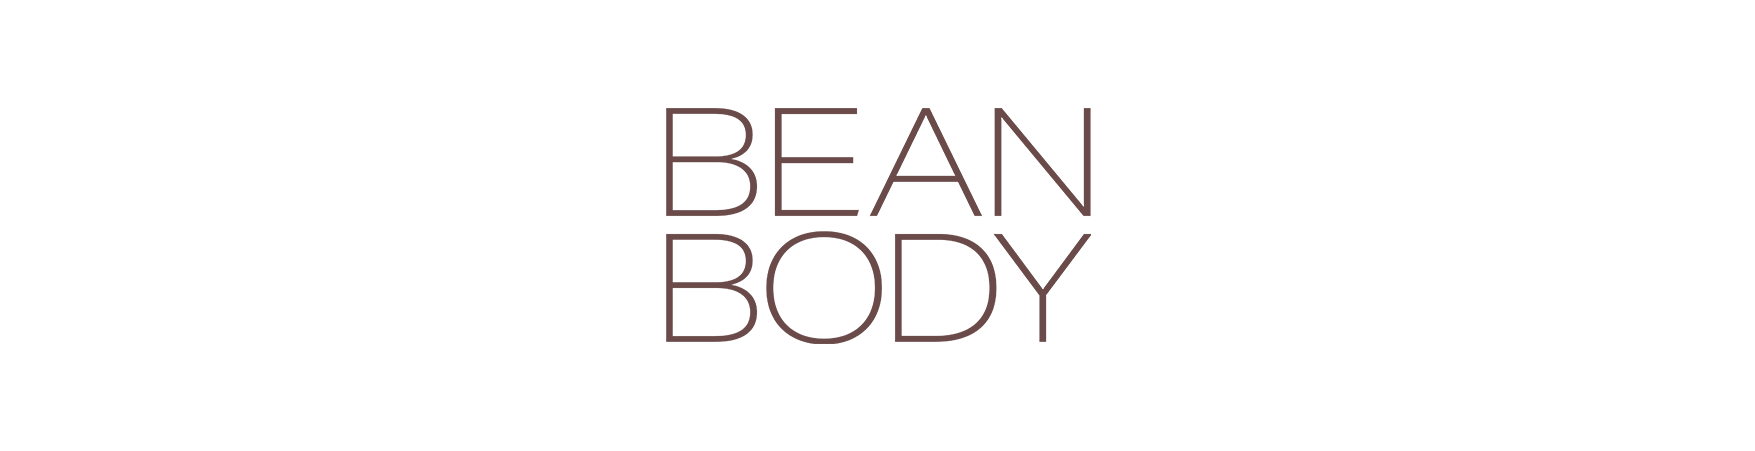 Bean Body